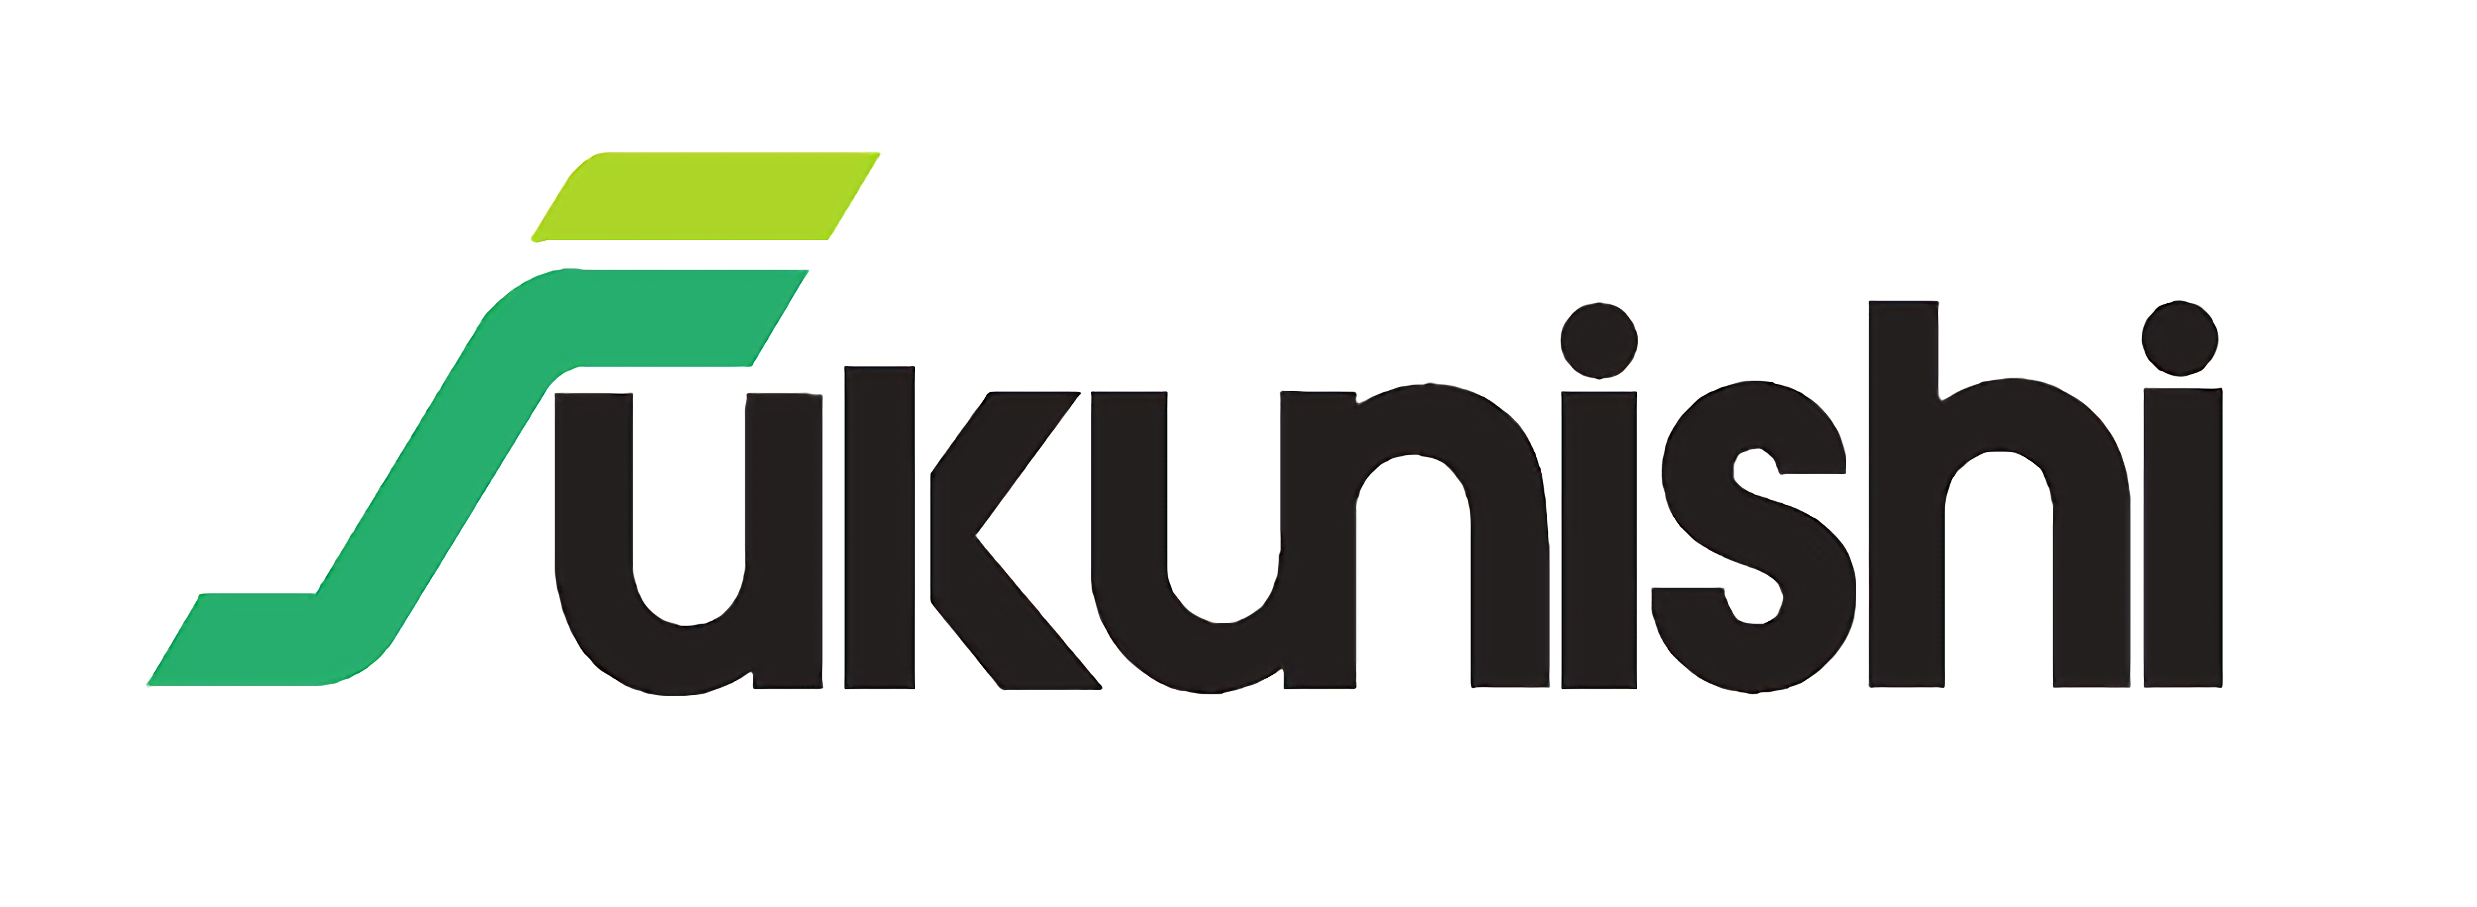 fukunishi-logo_kanban